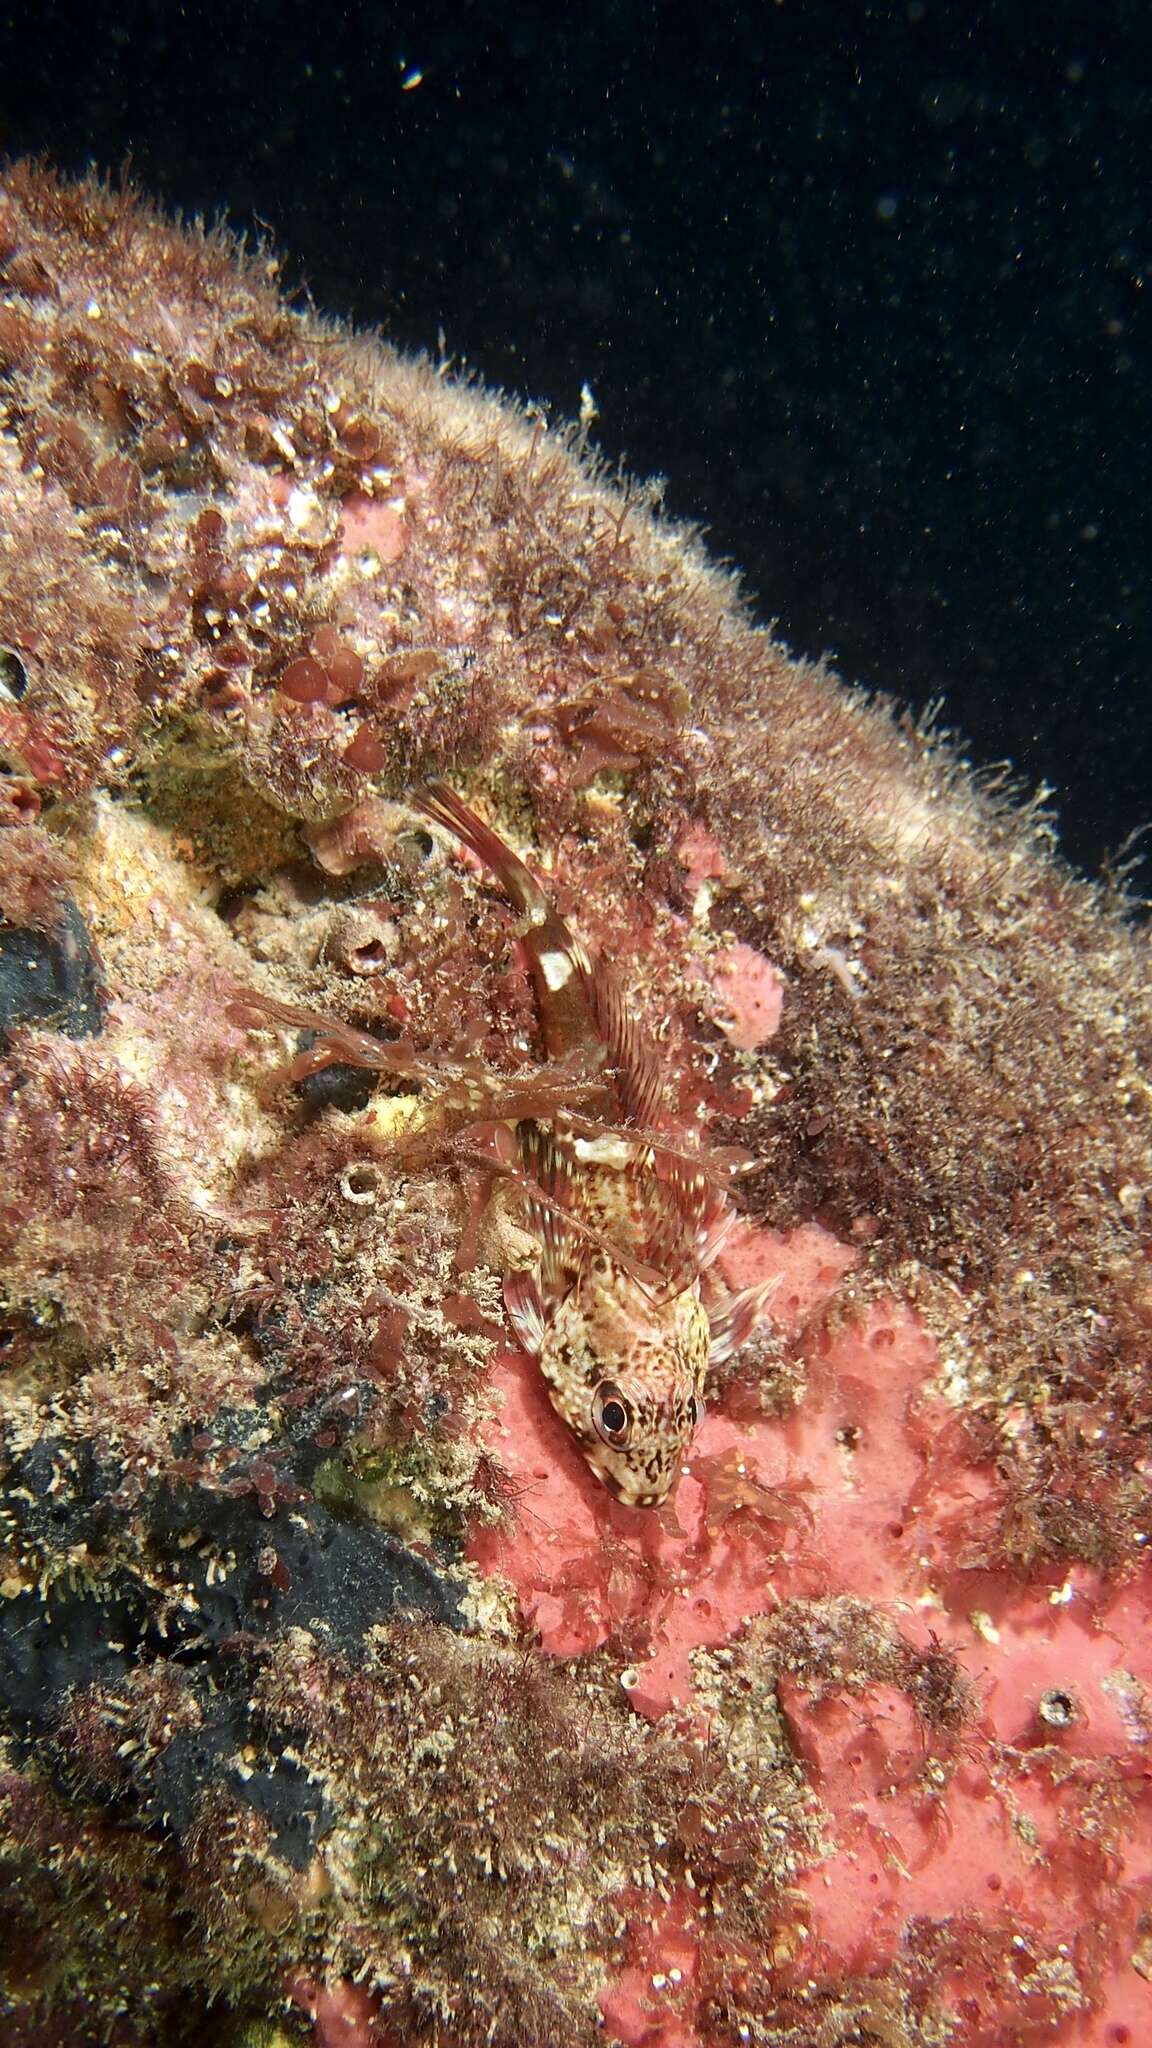 Image of thornfishes